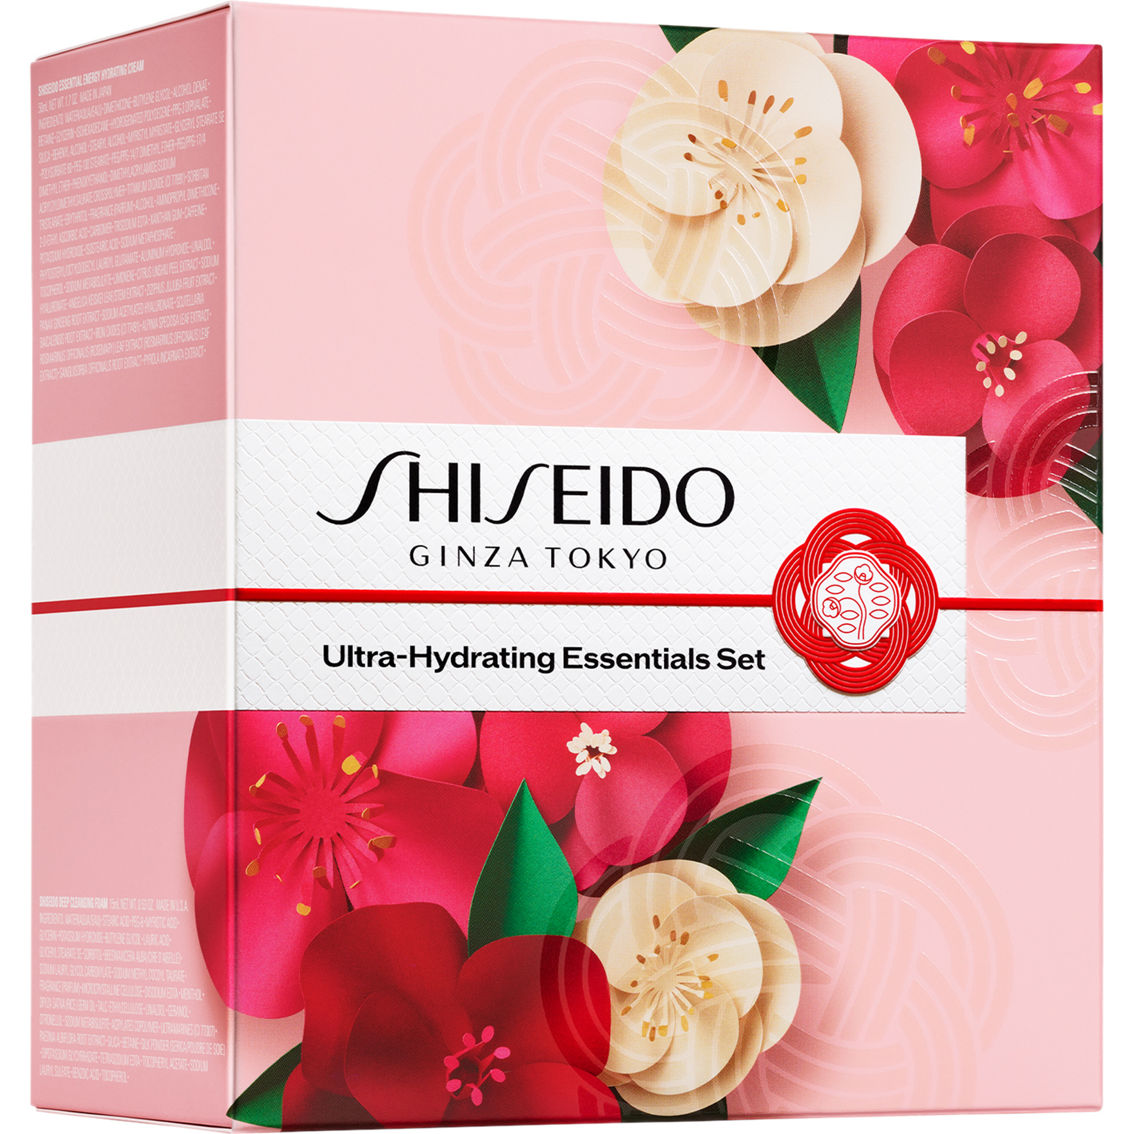 Shiseido Ultra-Hydrating Essentials 3 pc. Set - Image 3 of 6